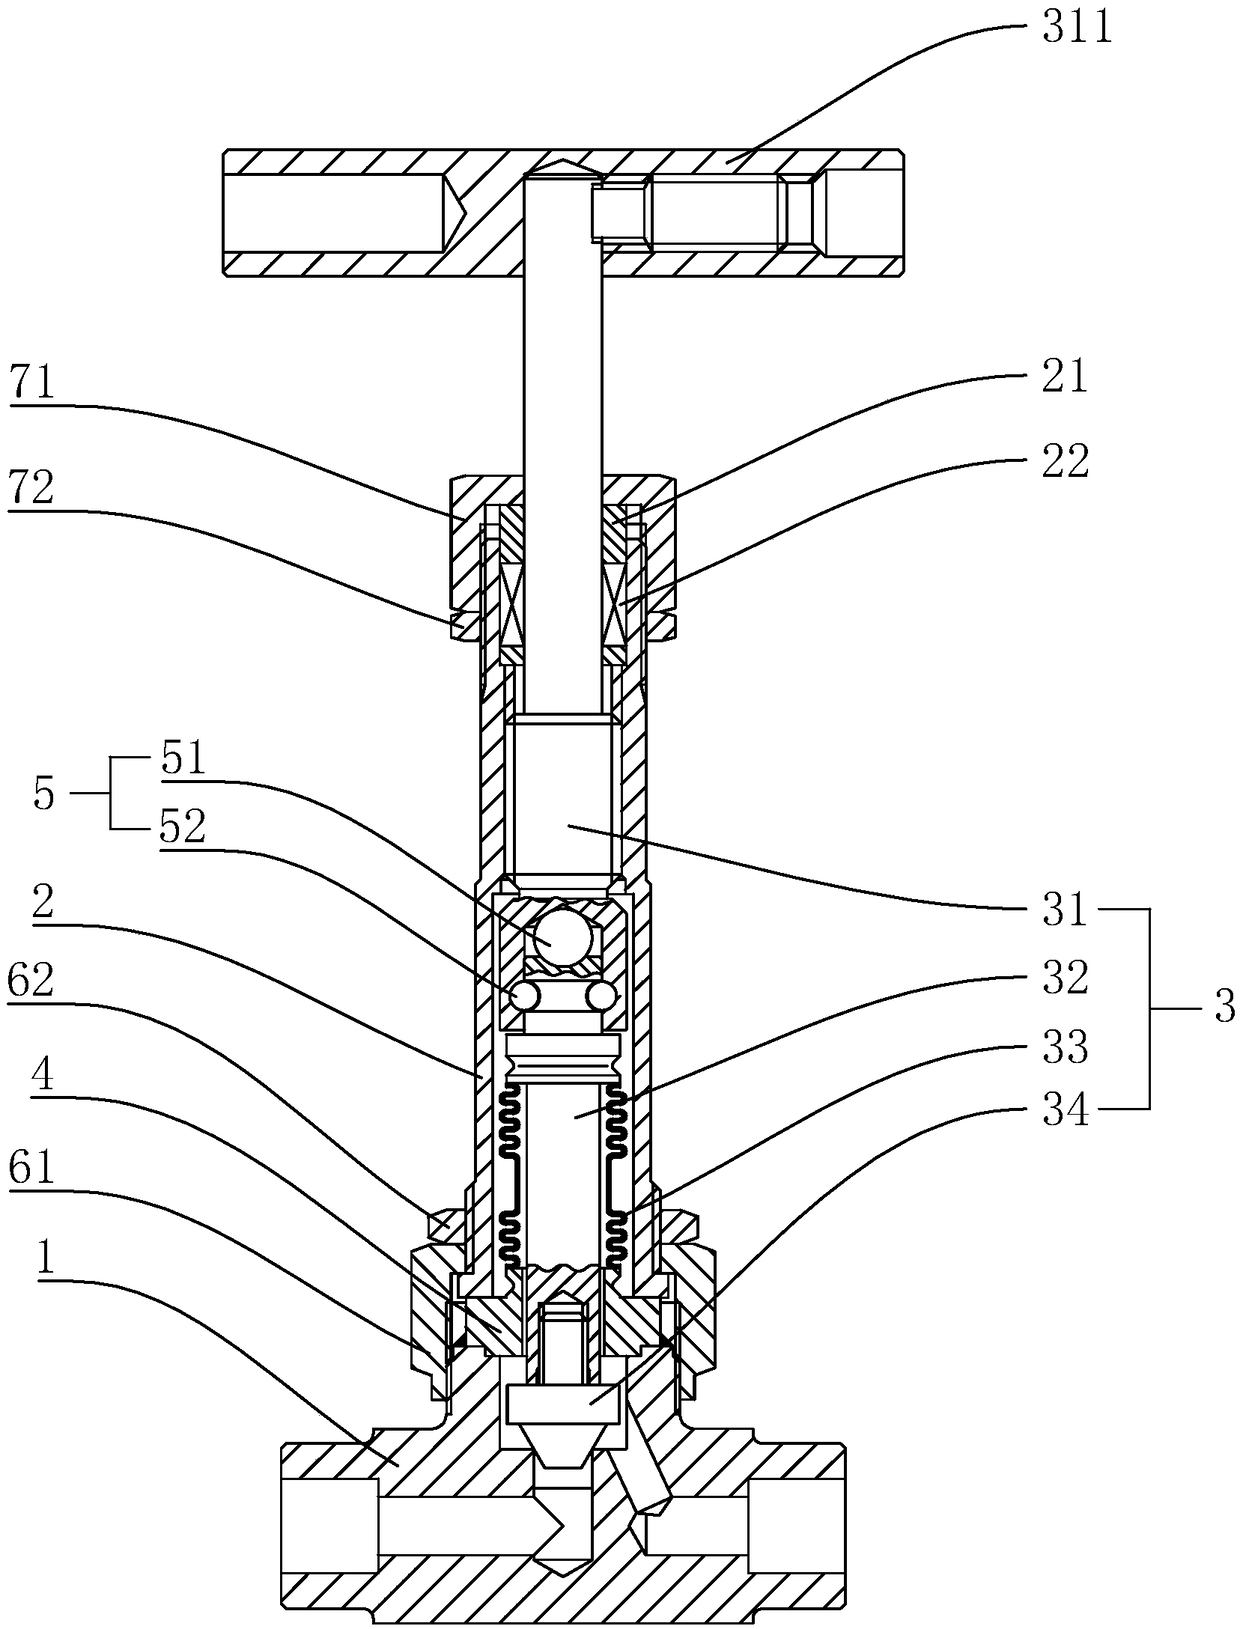 Novel double-sealed instrument block valve